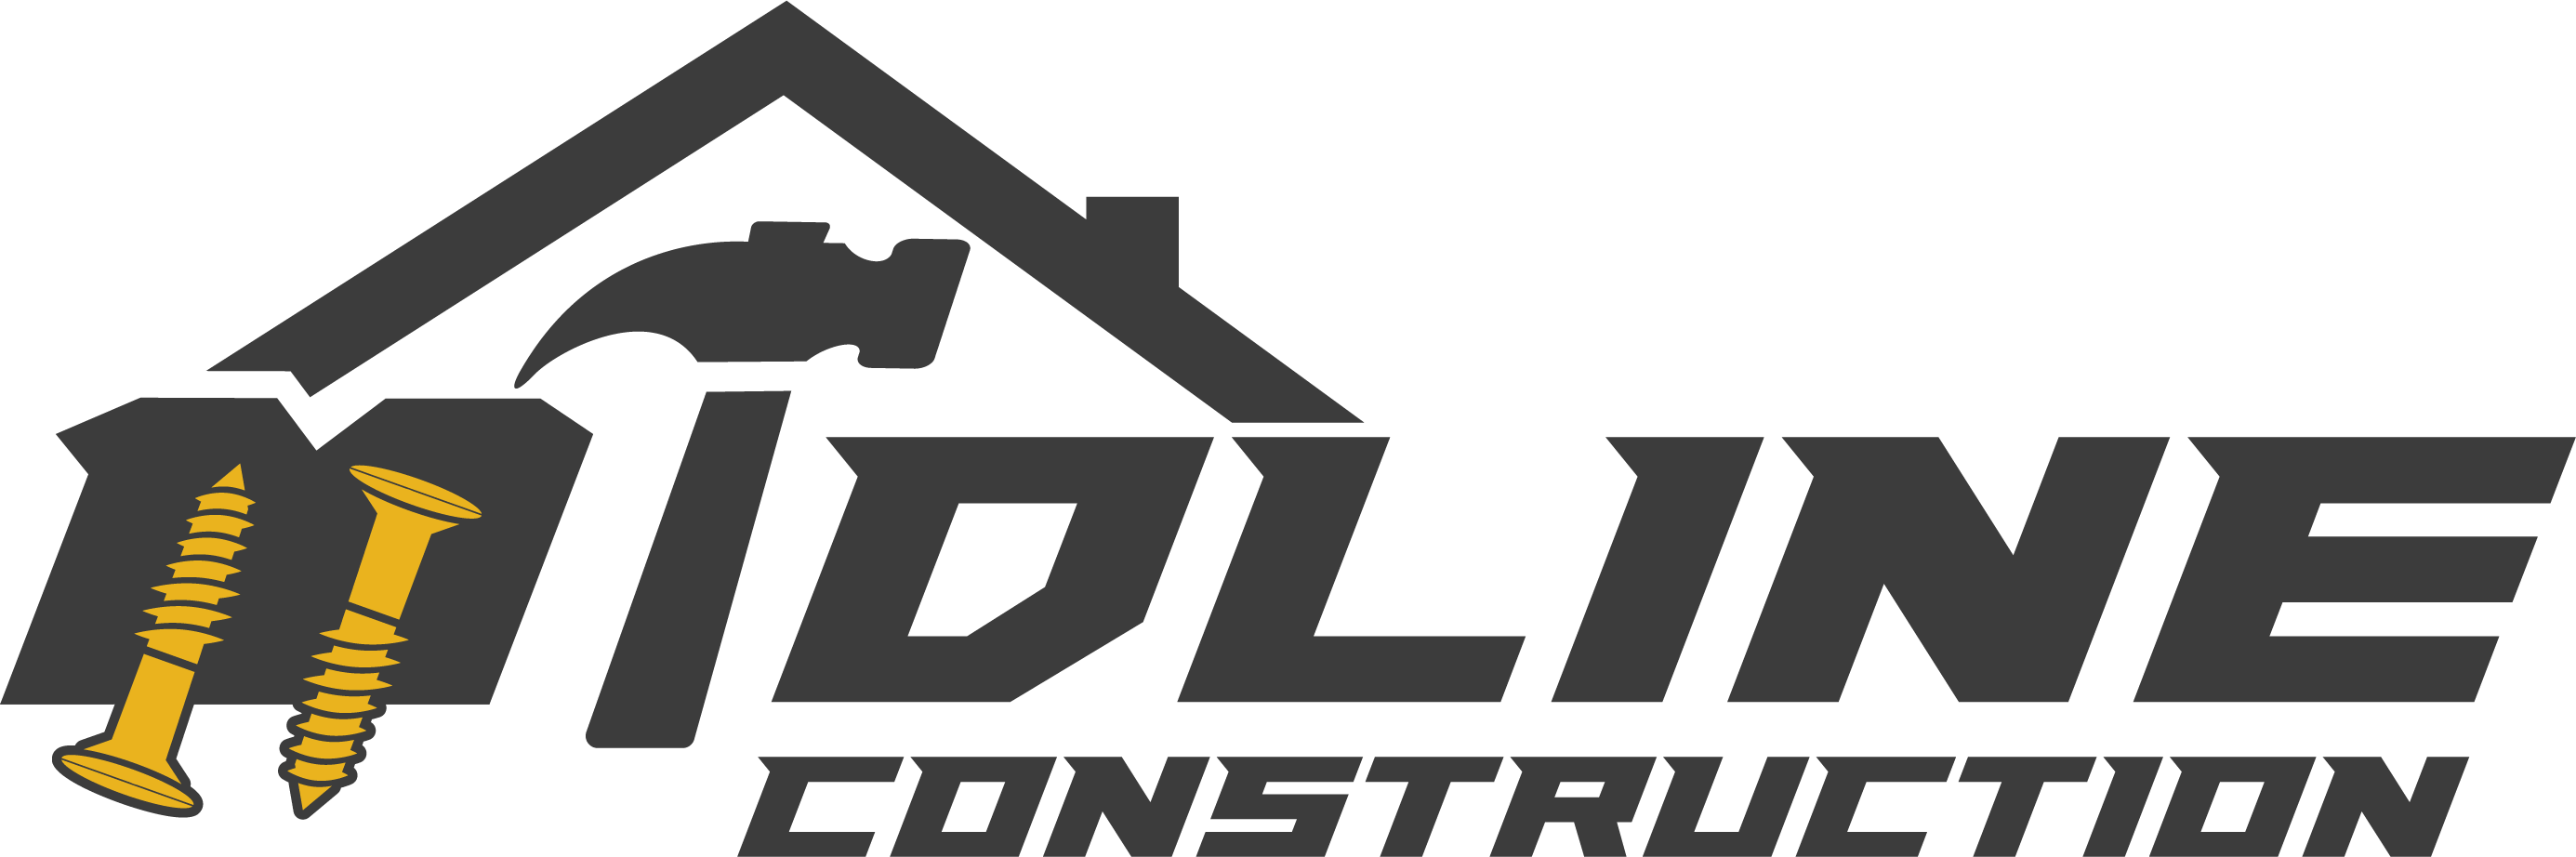 Midline Construction Limited